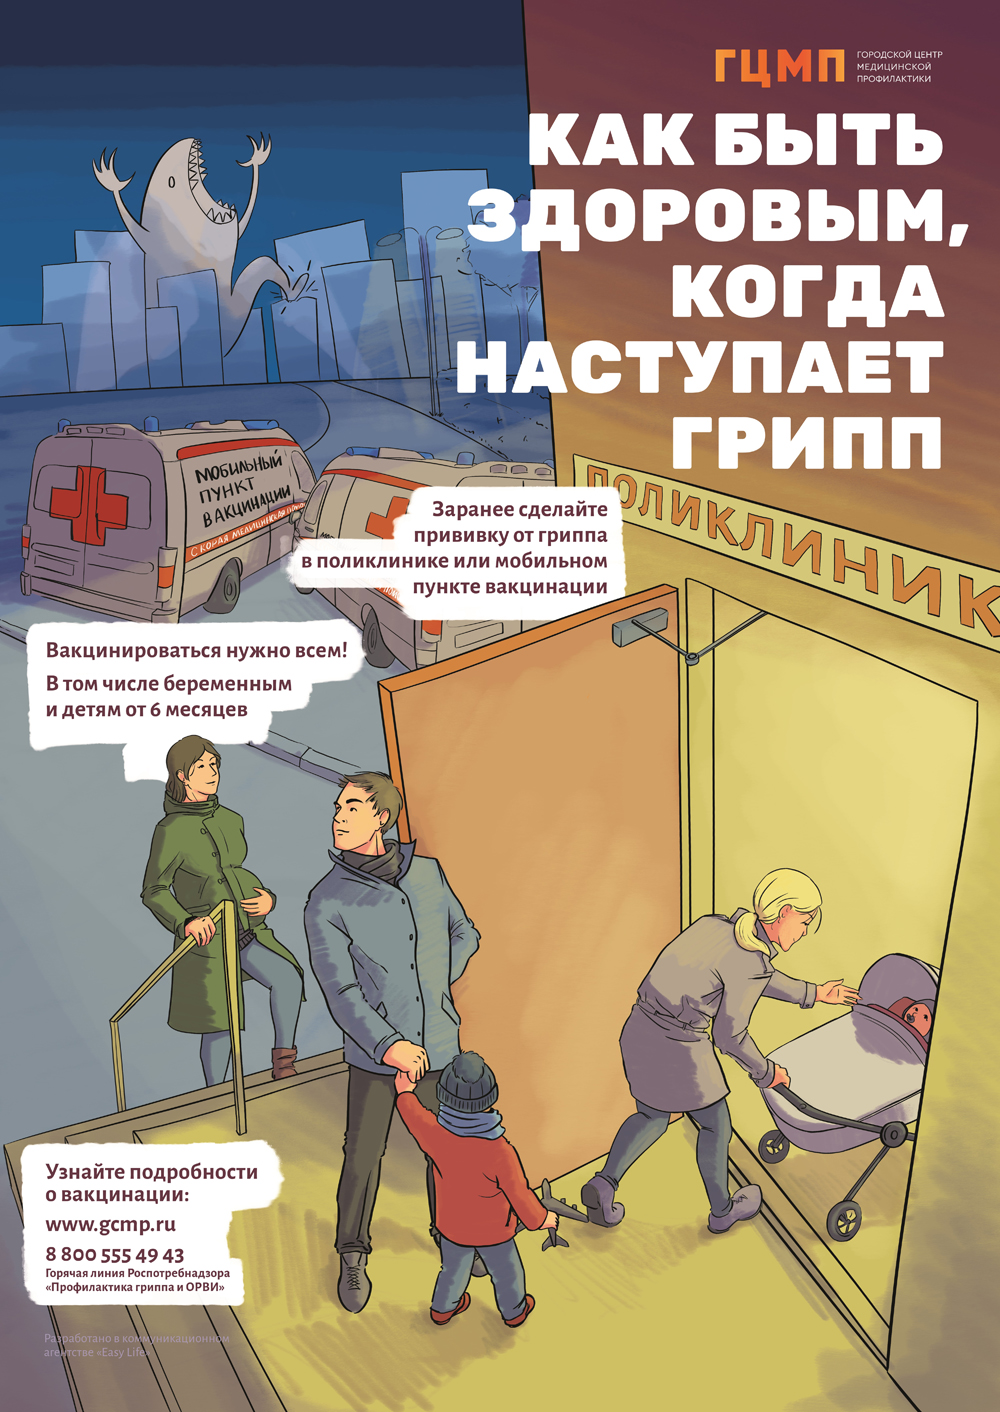 http://internat22.ru/media/documents/plakat_gripp_wkZCKw2.jpg